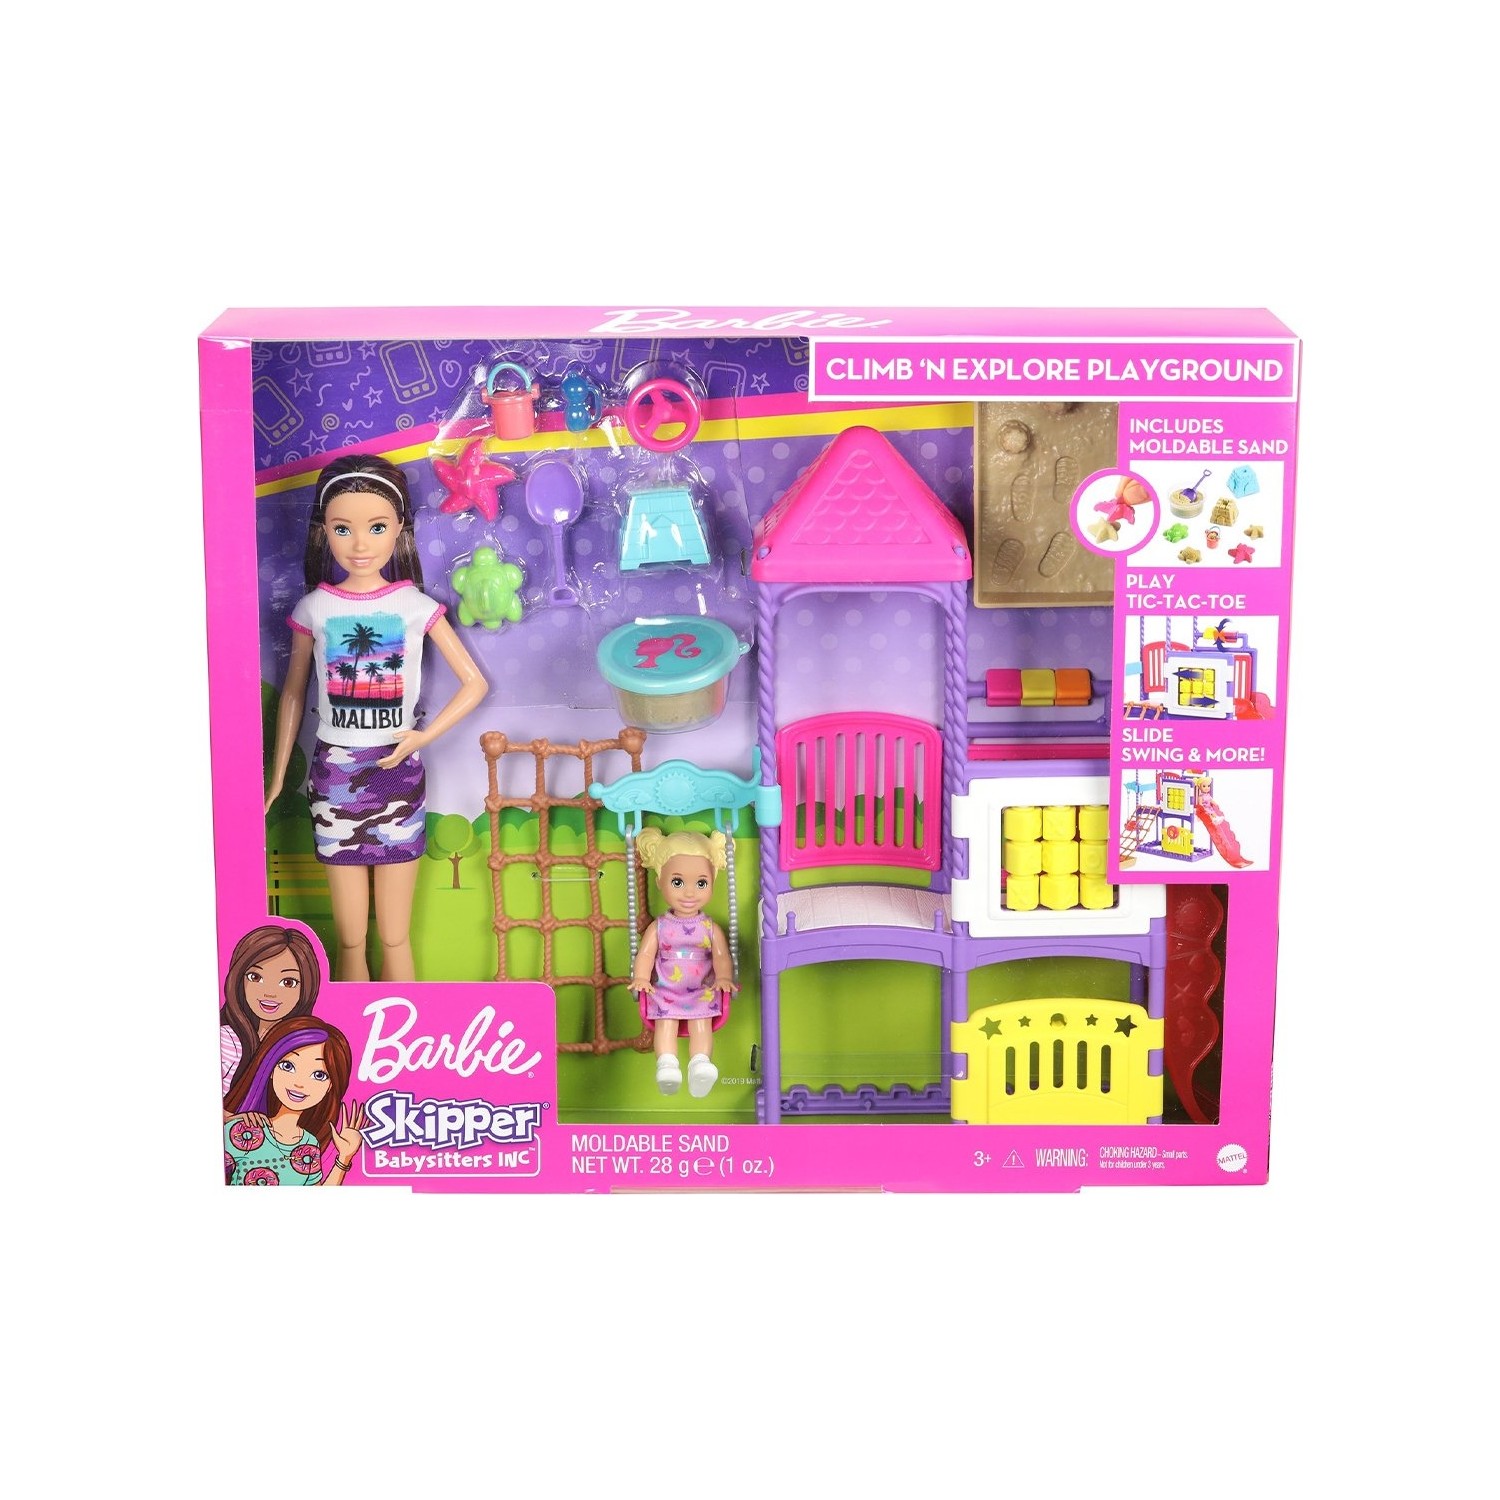 Игровой набор Barbie Skipper Babysitters игровой набор barbie кемпинг